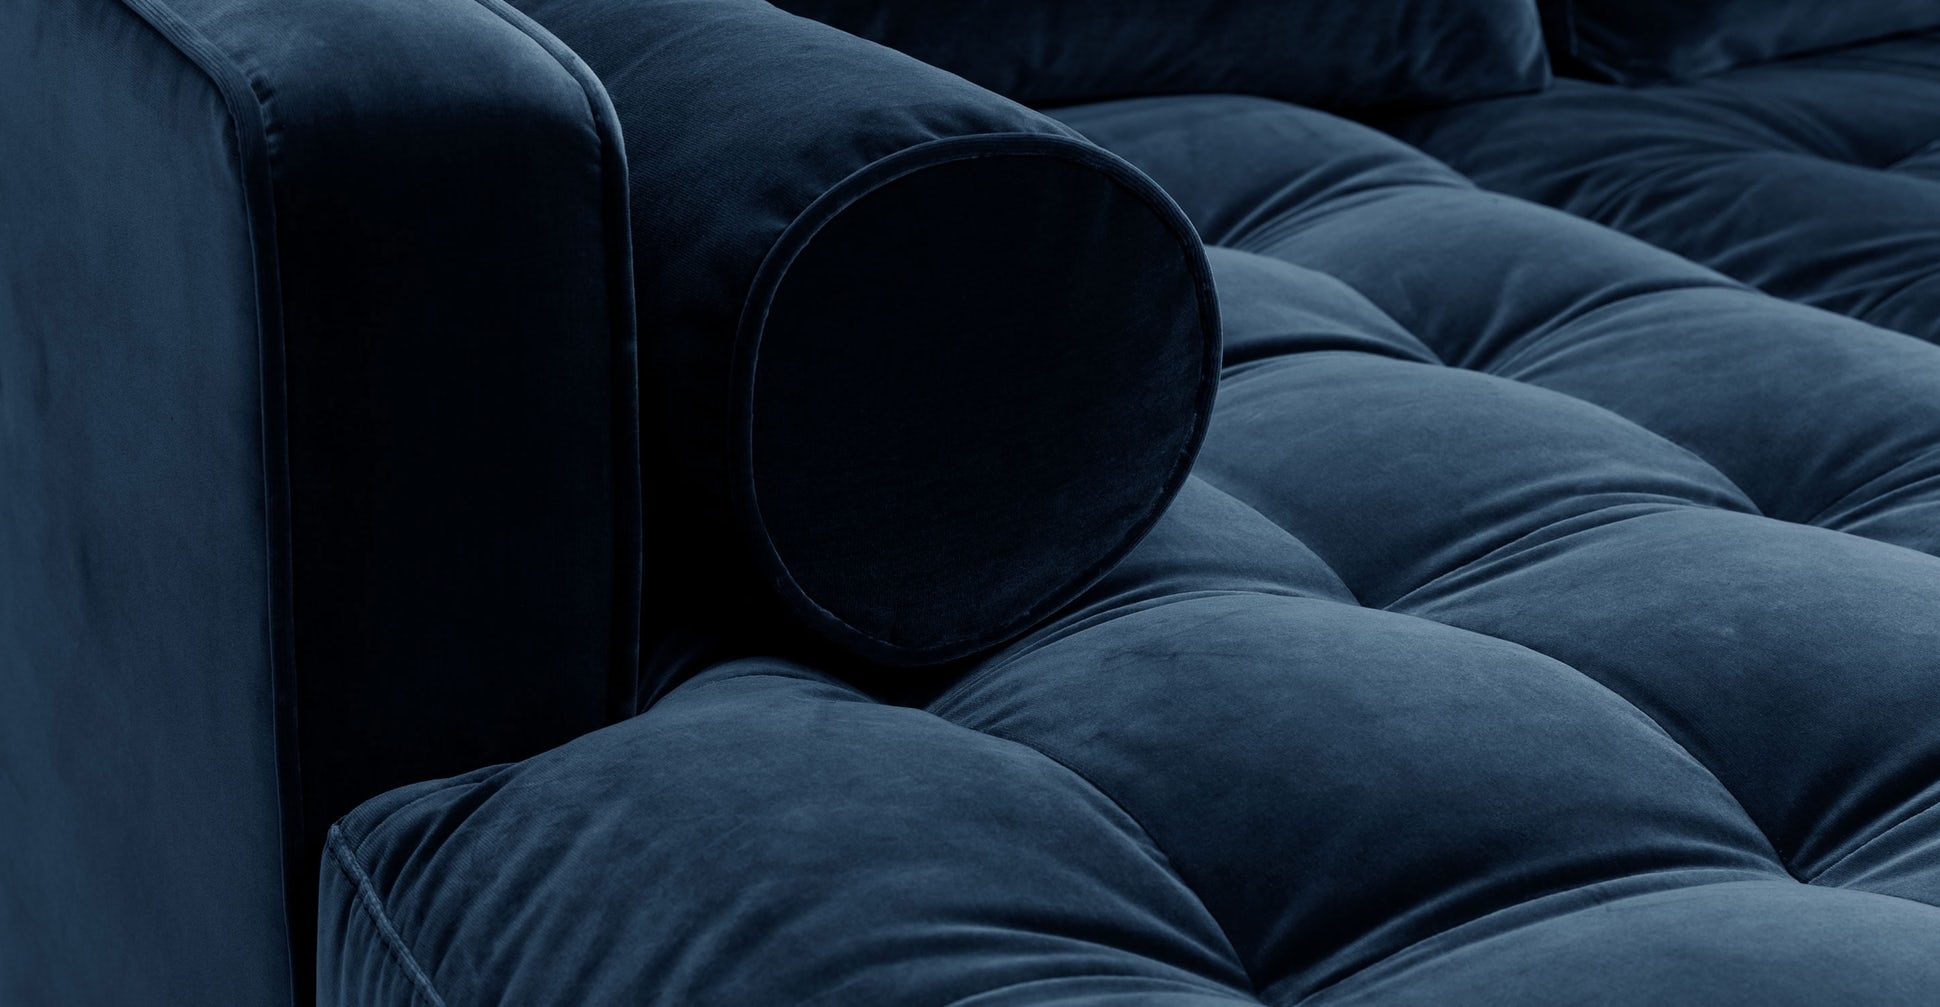 Sven Cascadia Blue Left Sectional Sofa - Image 3